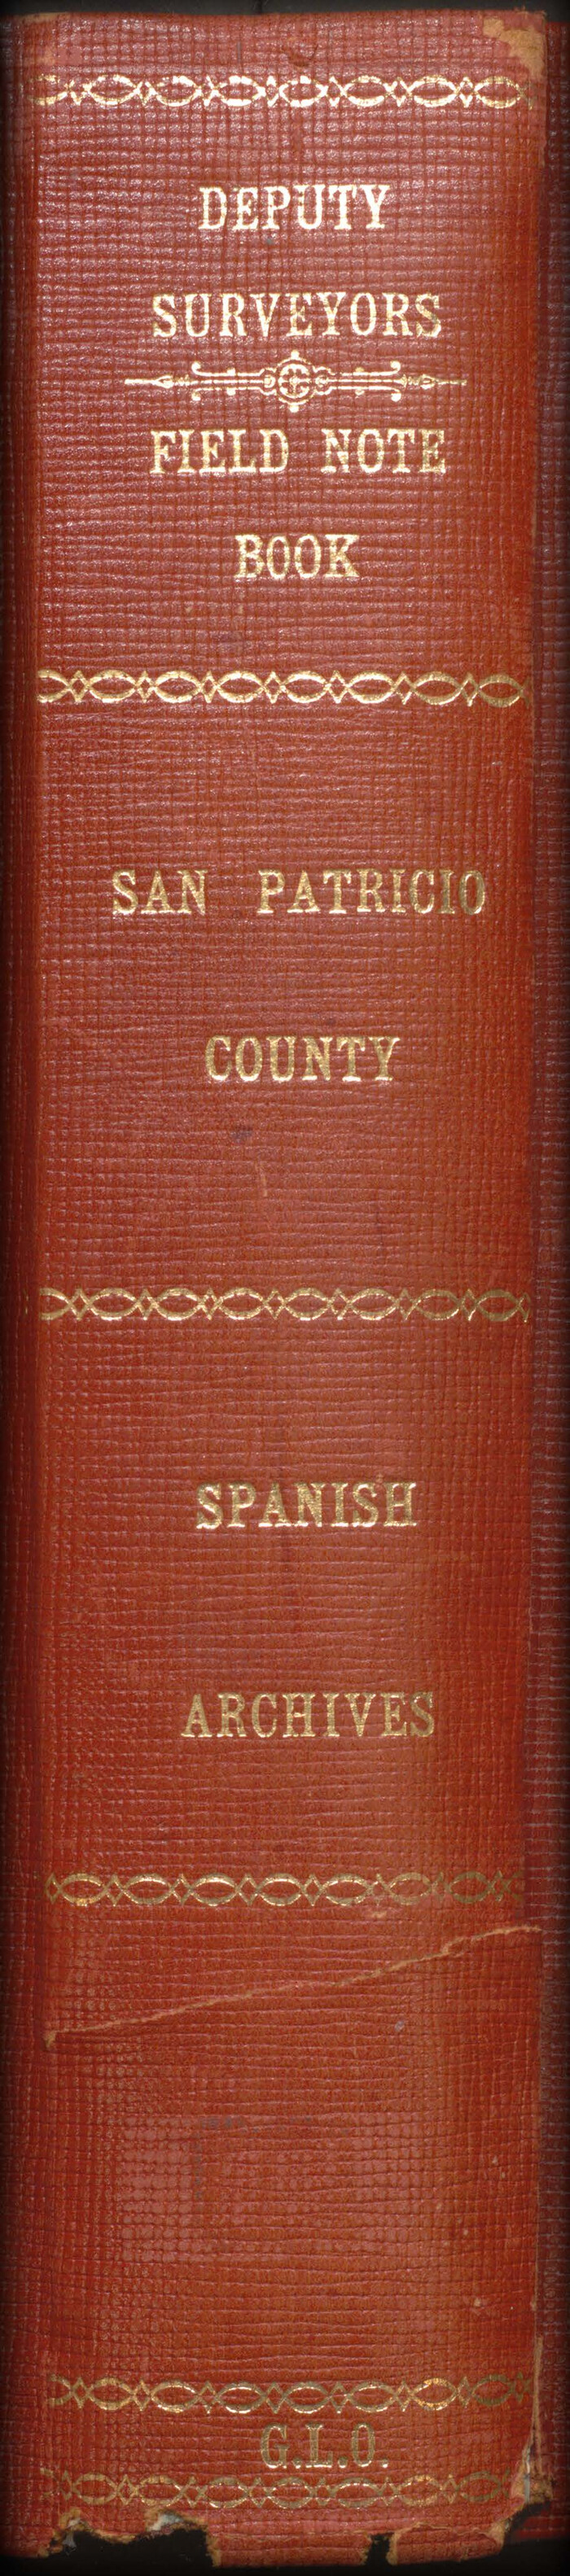 96675, Deputy Surveyors Field Note Book, San Patricio County, Historical Volumes